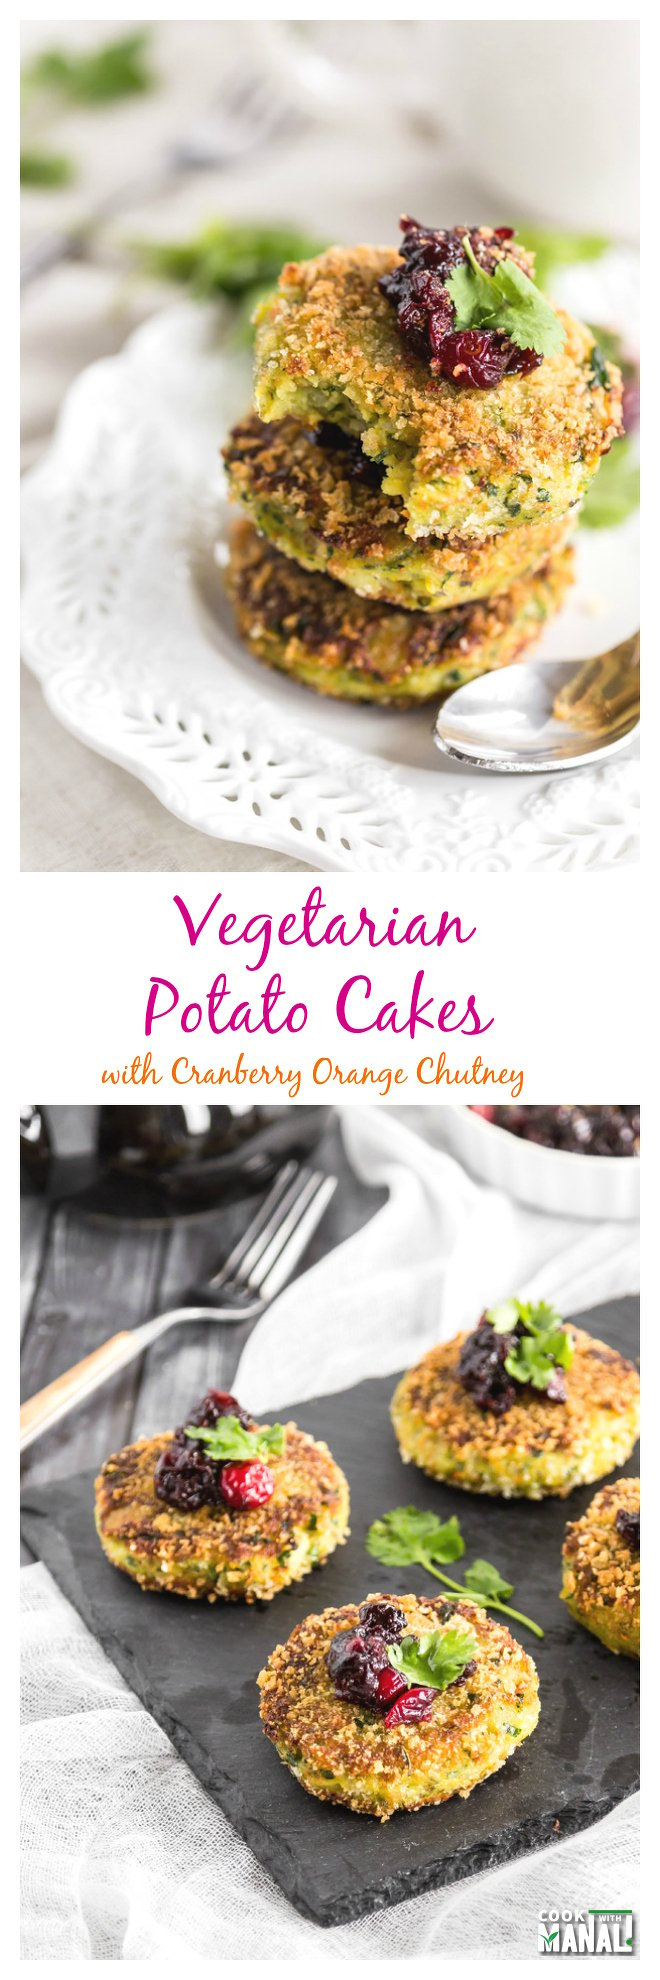 Vegetarian Potato Cakes with Cranberry Orange Chutney Collage